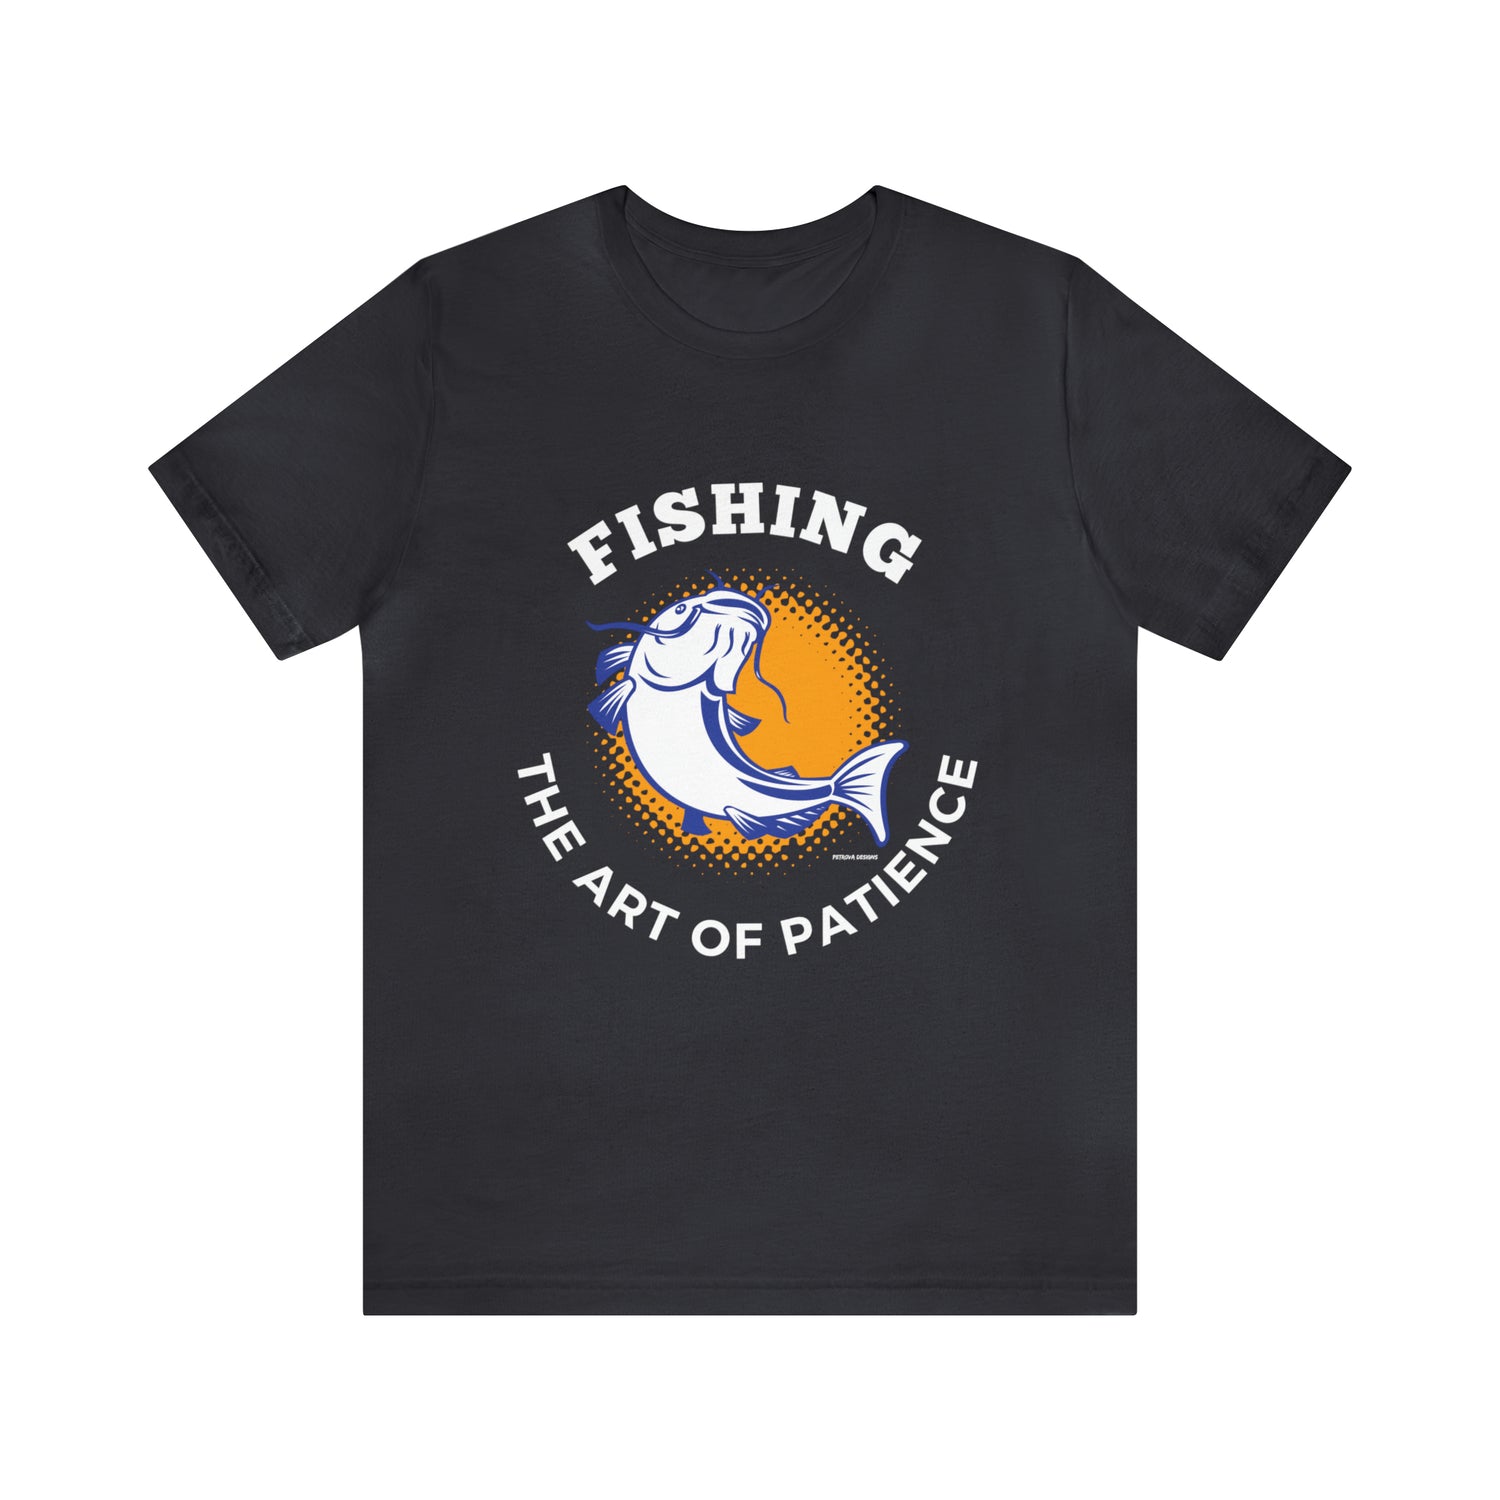 Dark Grey T-Shirt Tshirt Design Gift for Friend and Family Short Sleeved Shirt Fishing Hobby Aesthetic Petrova Designs